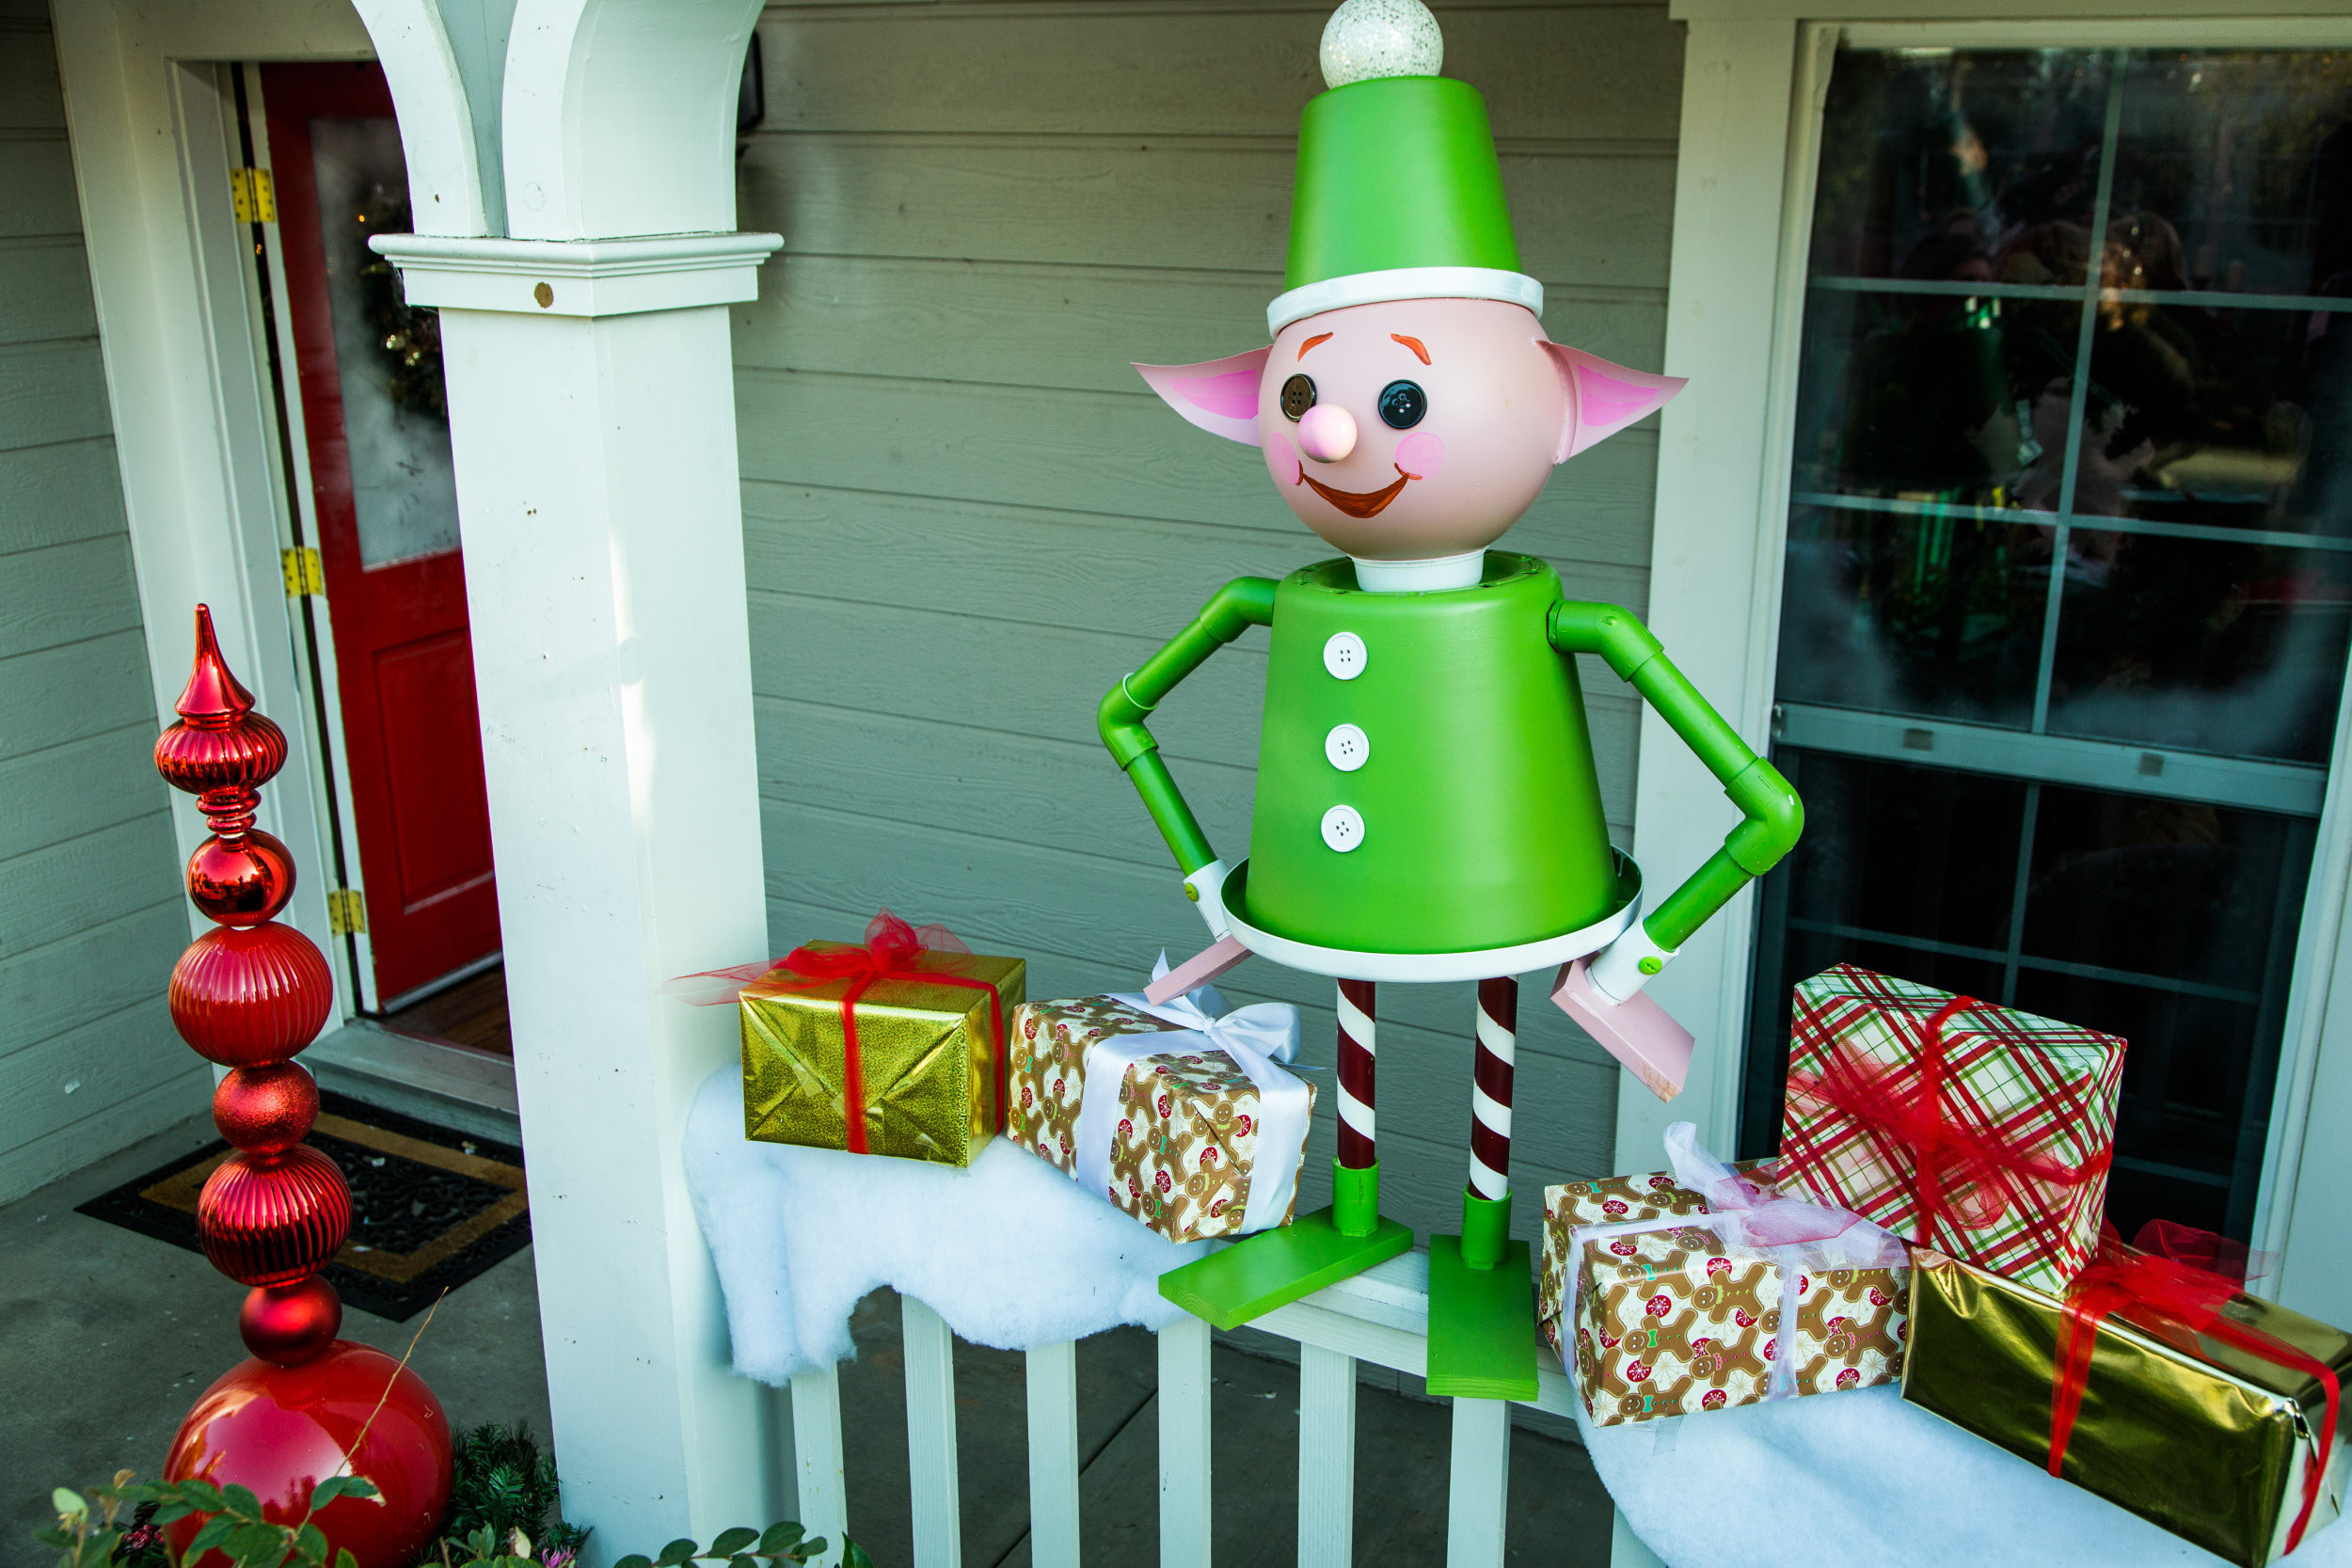 DIY Christmas Lawn Decorations
 DIY Lawn Elves Home & Family